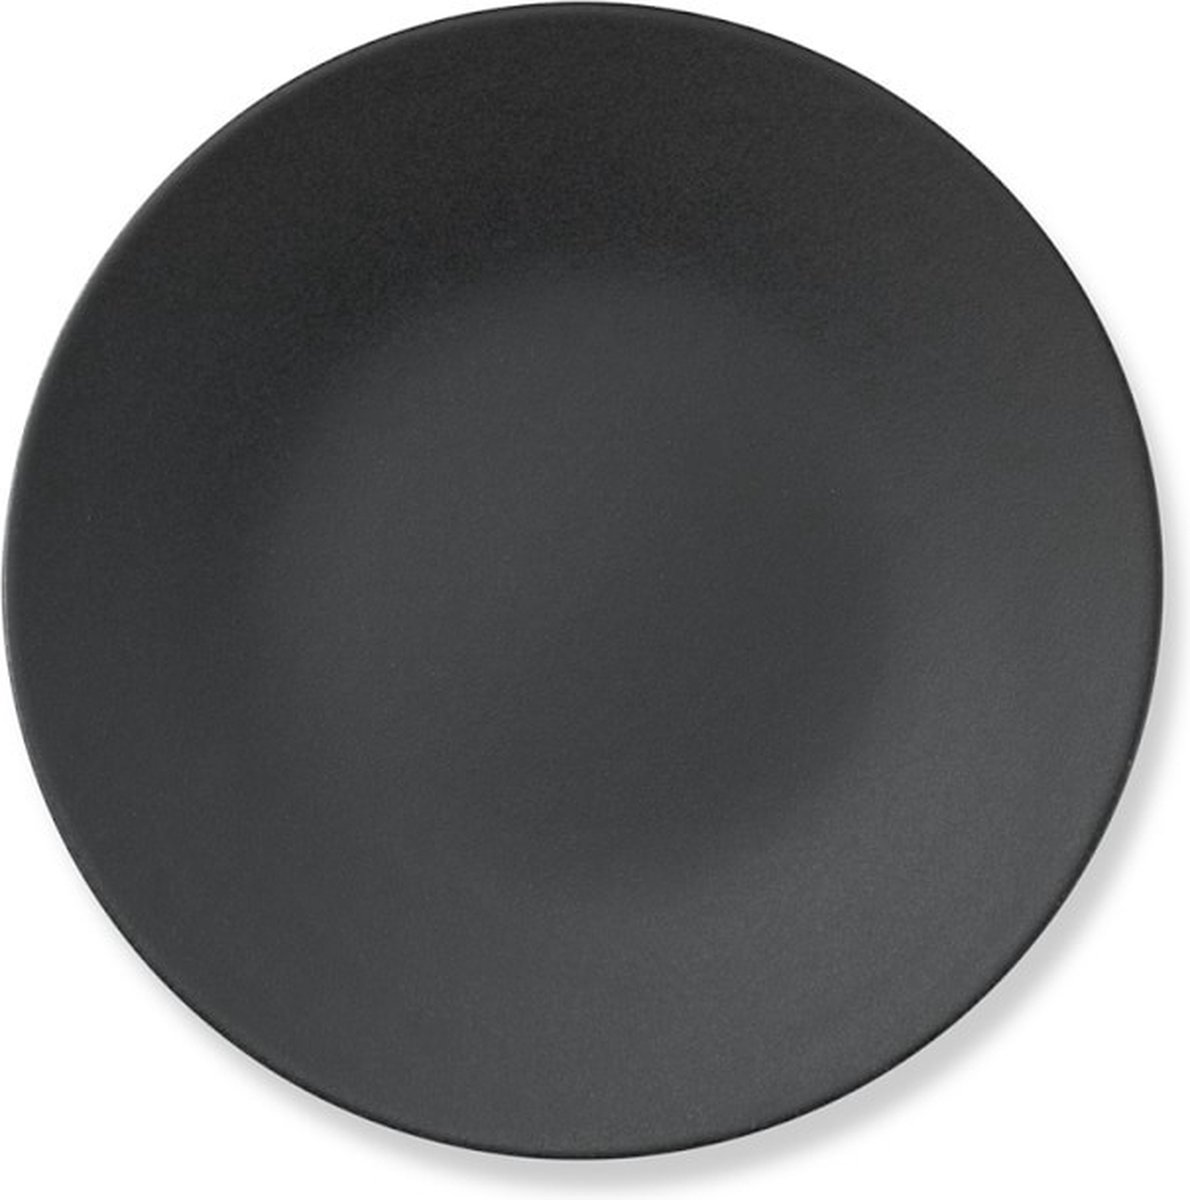 Apilco - Reglisse - Feestdagen tip - Ontbijtbord - Plat - 21cm - Donker grijs/ Zwart - Porselein - Set van 6 stuks